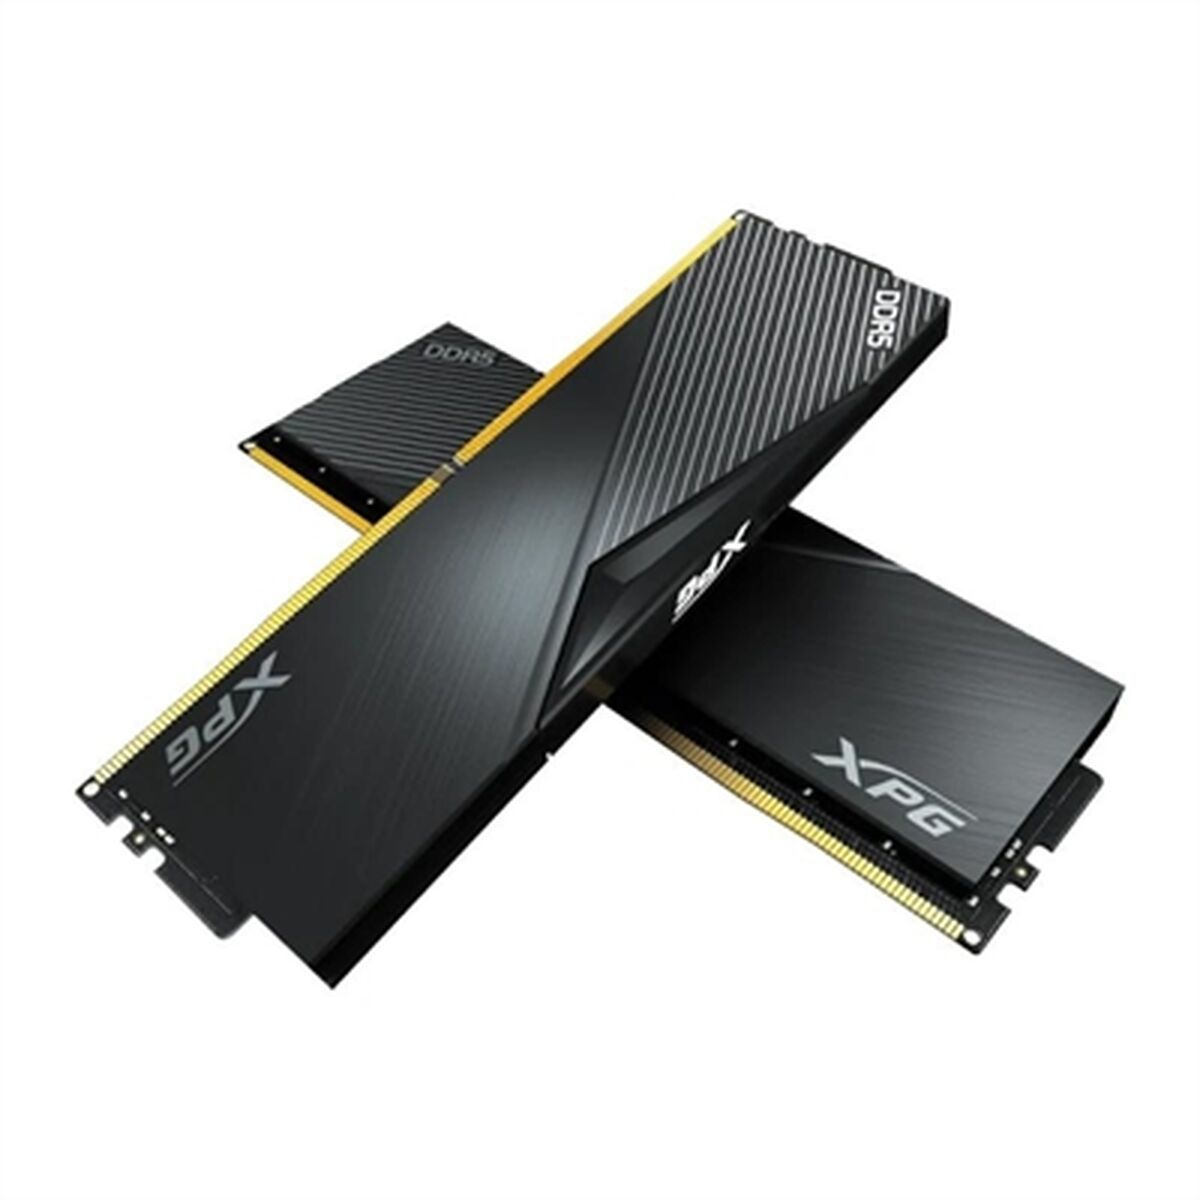 Memoria RAM Adata XPG Lancer DDR5 32 GB cl30